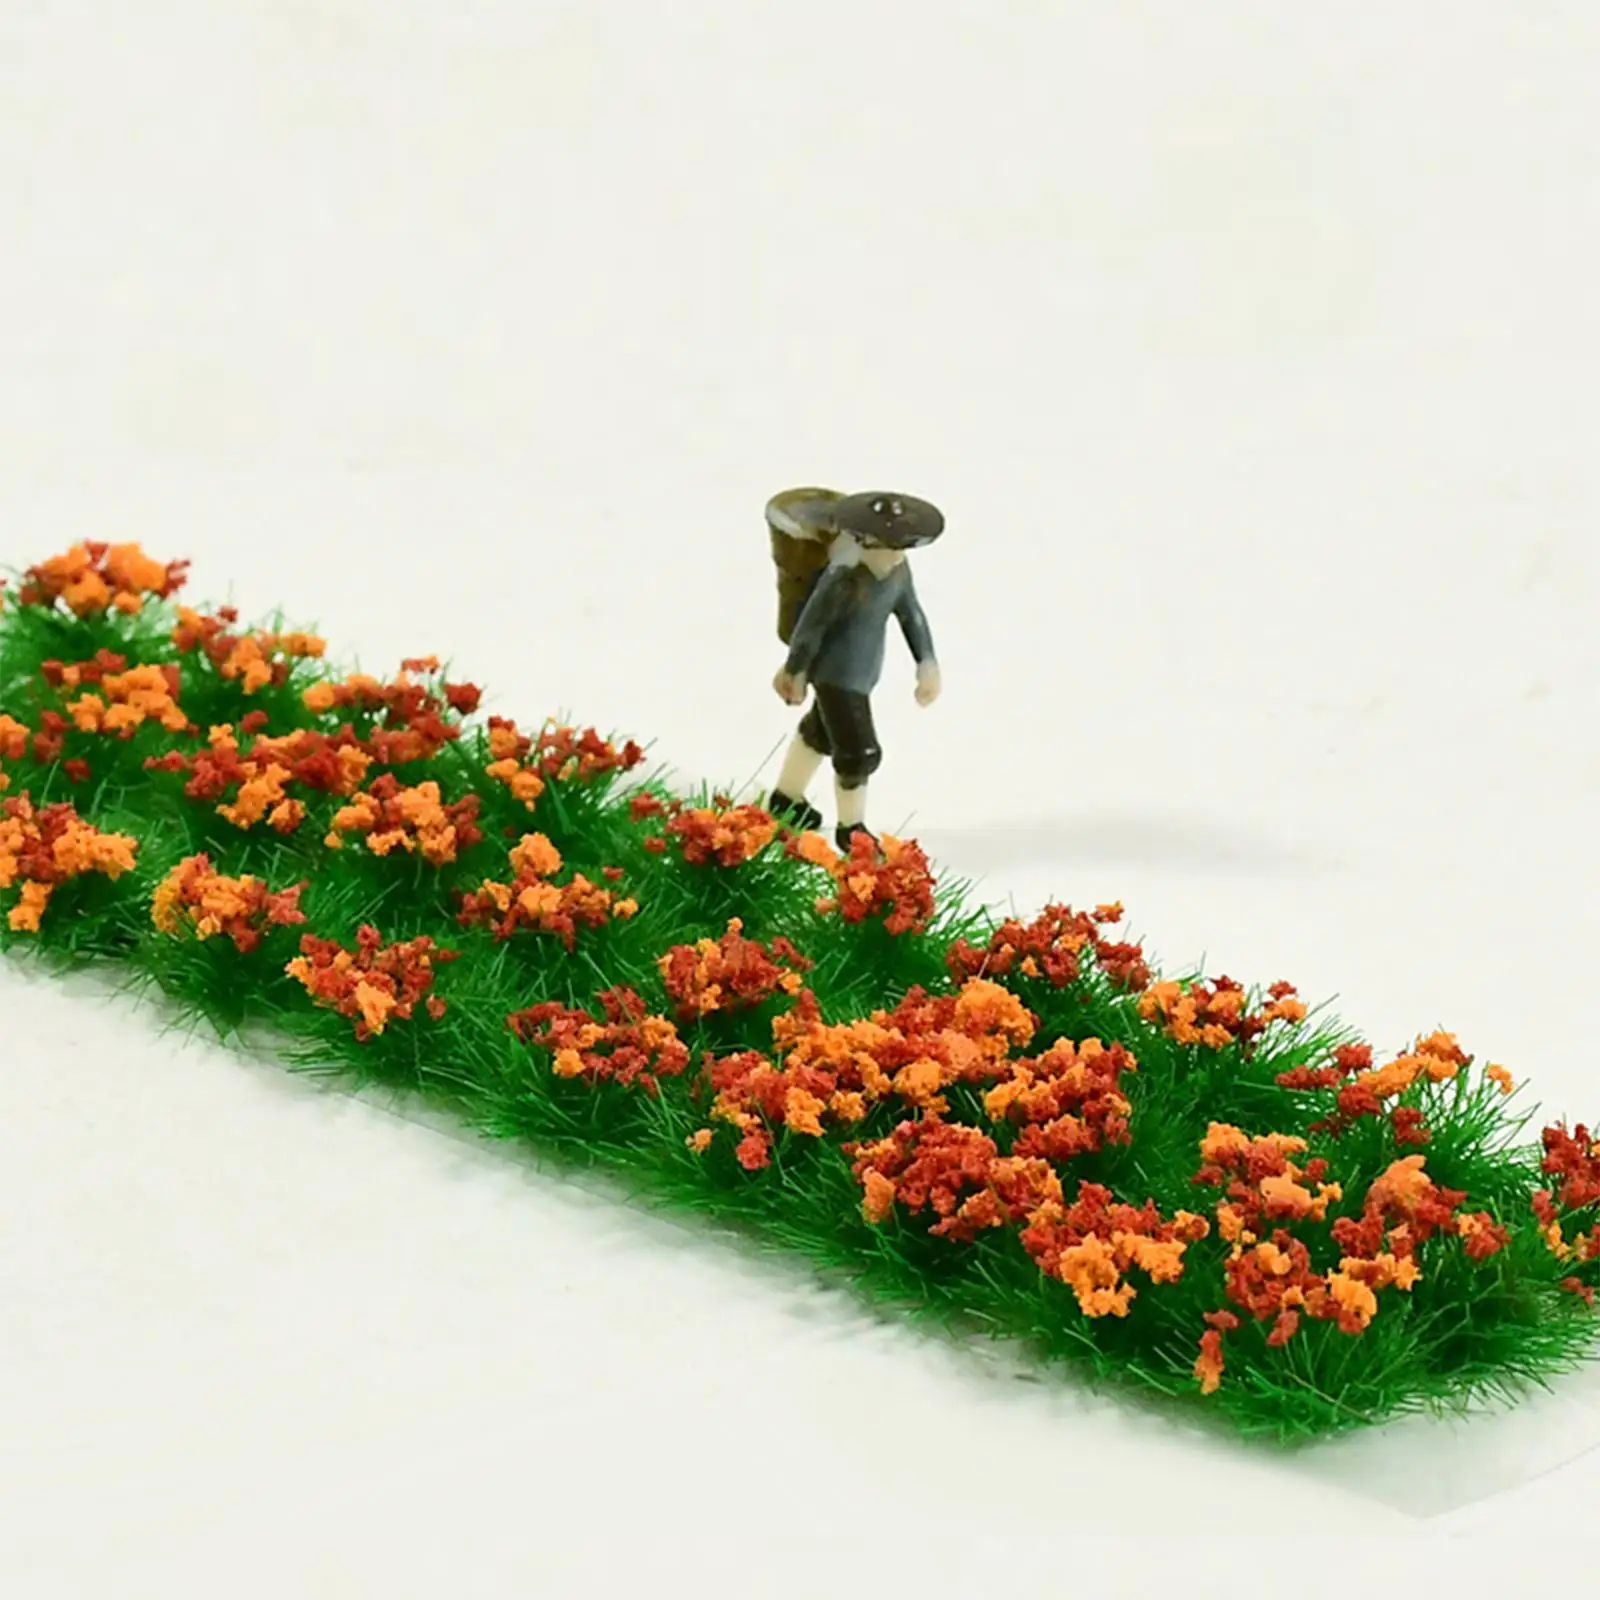 Bushy Tufts Static Scenery Model Landscape Train Layout Model DIY Decors Modeling Flower Cluster Grass Tufts for Garden Railway